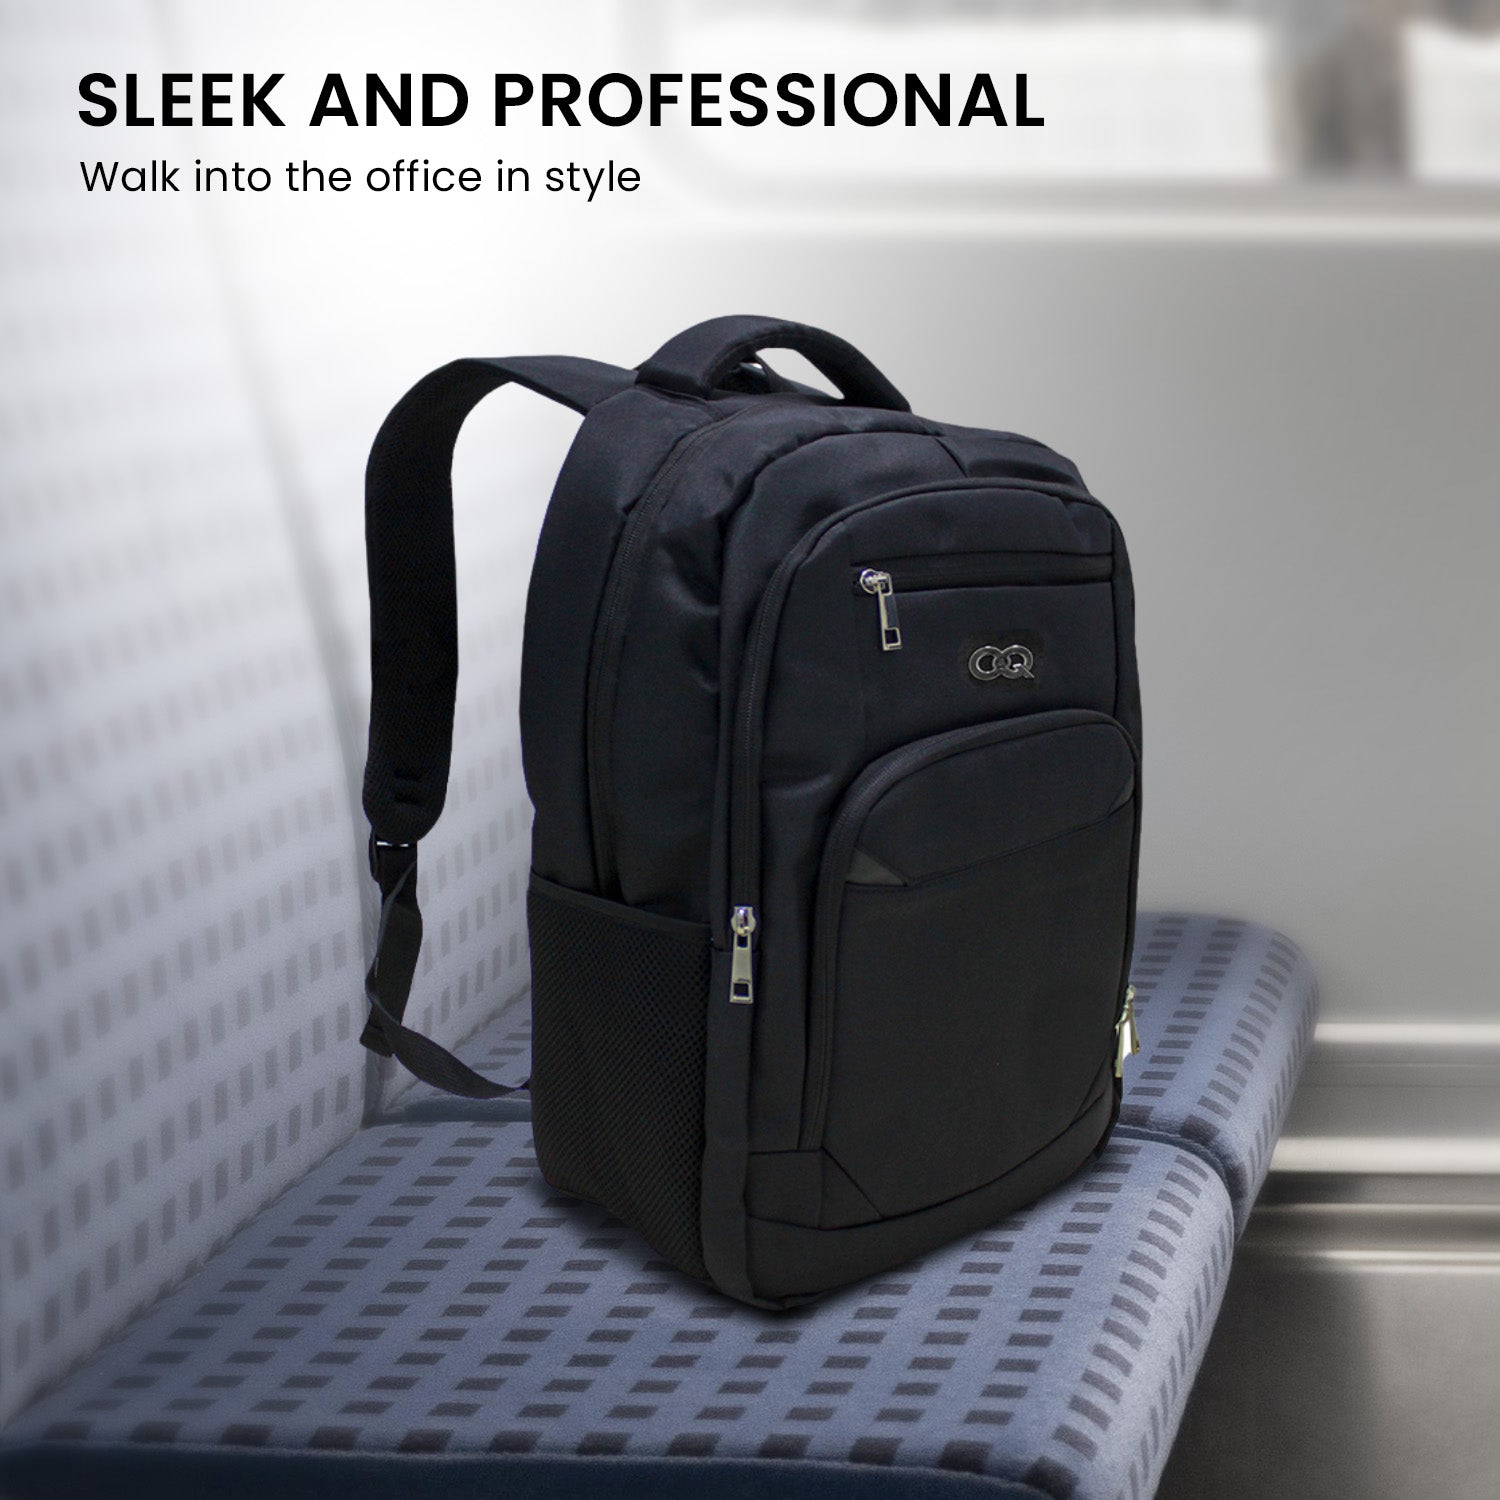 Klika Large Water-Resistant Travel Laptop Backpack